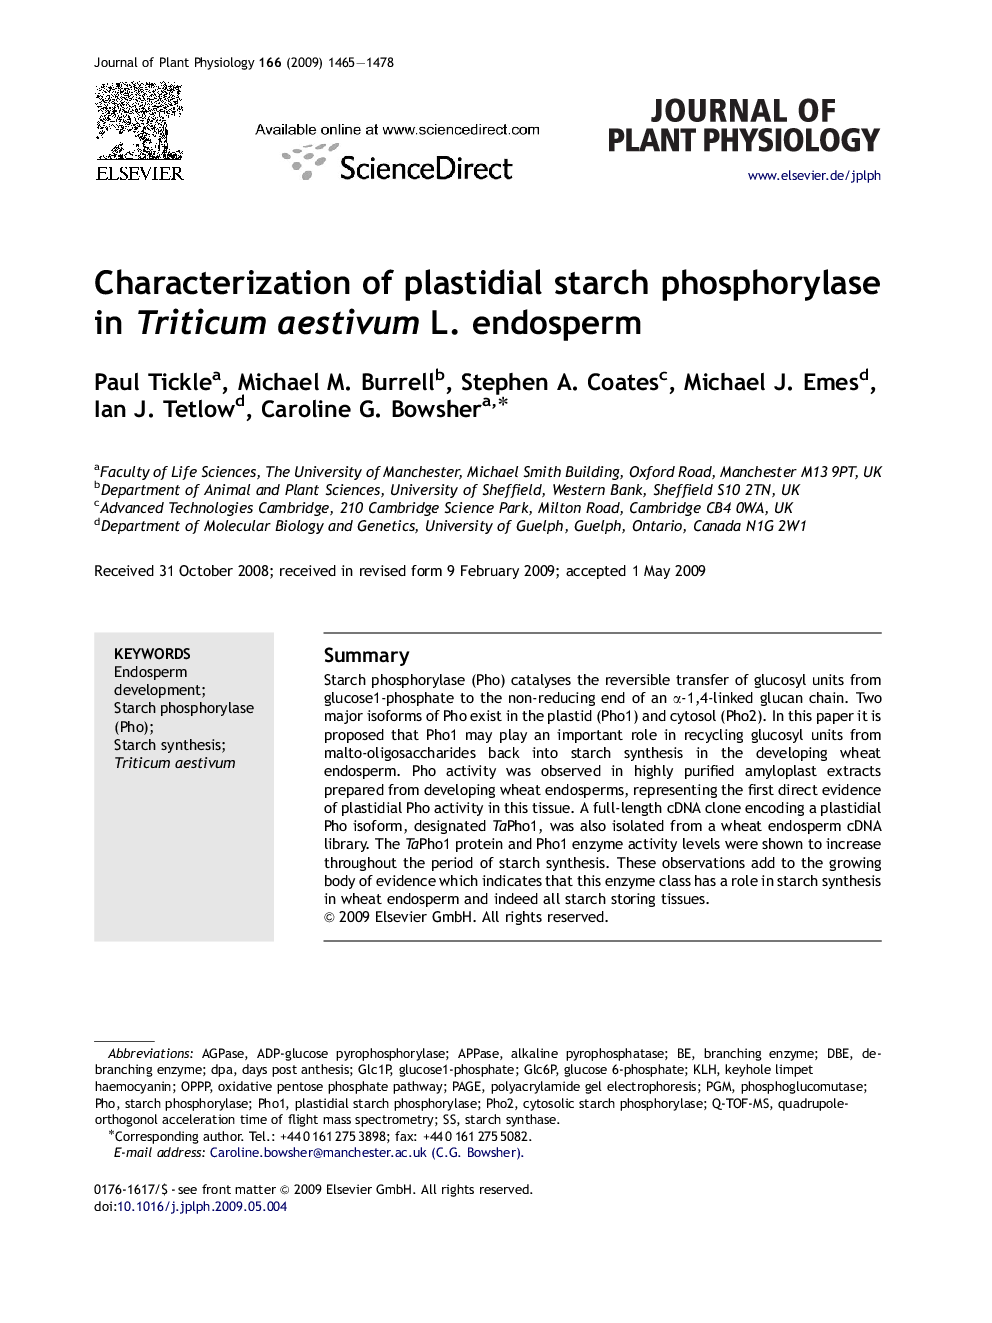 Characterization of plastidial starch phosphorylase in Triticum aestivum L. endosperm